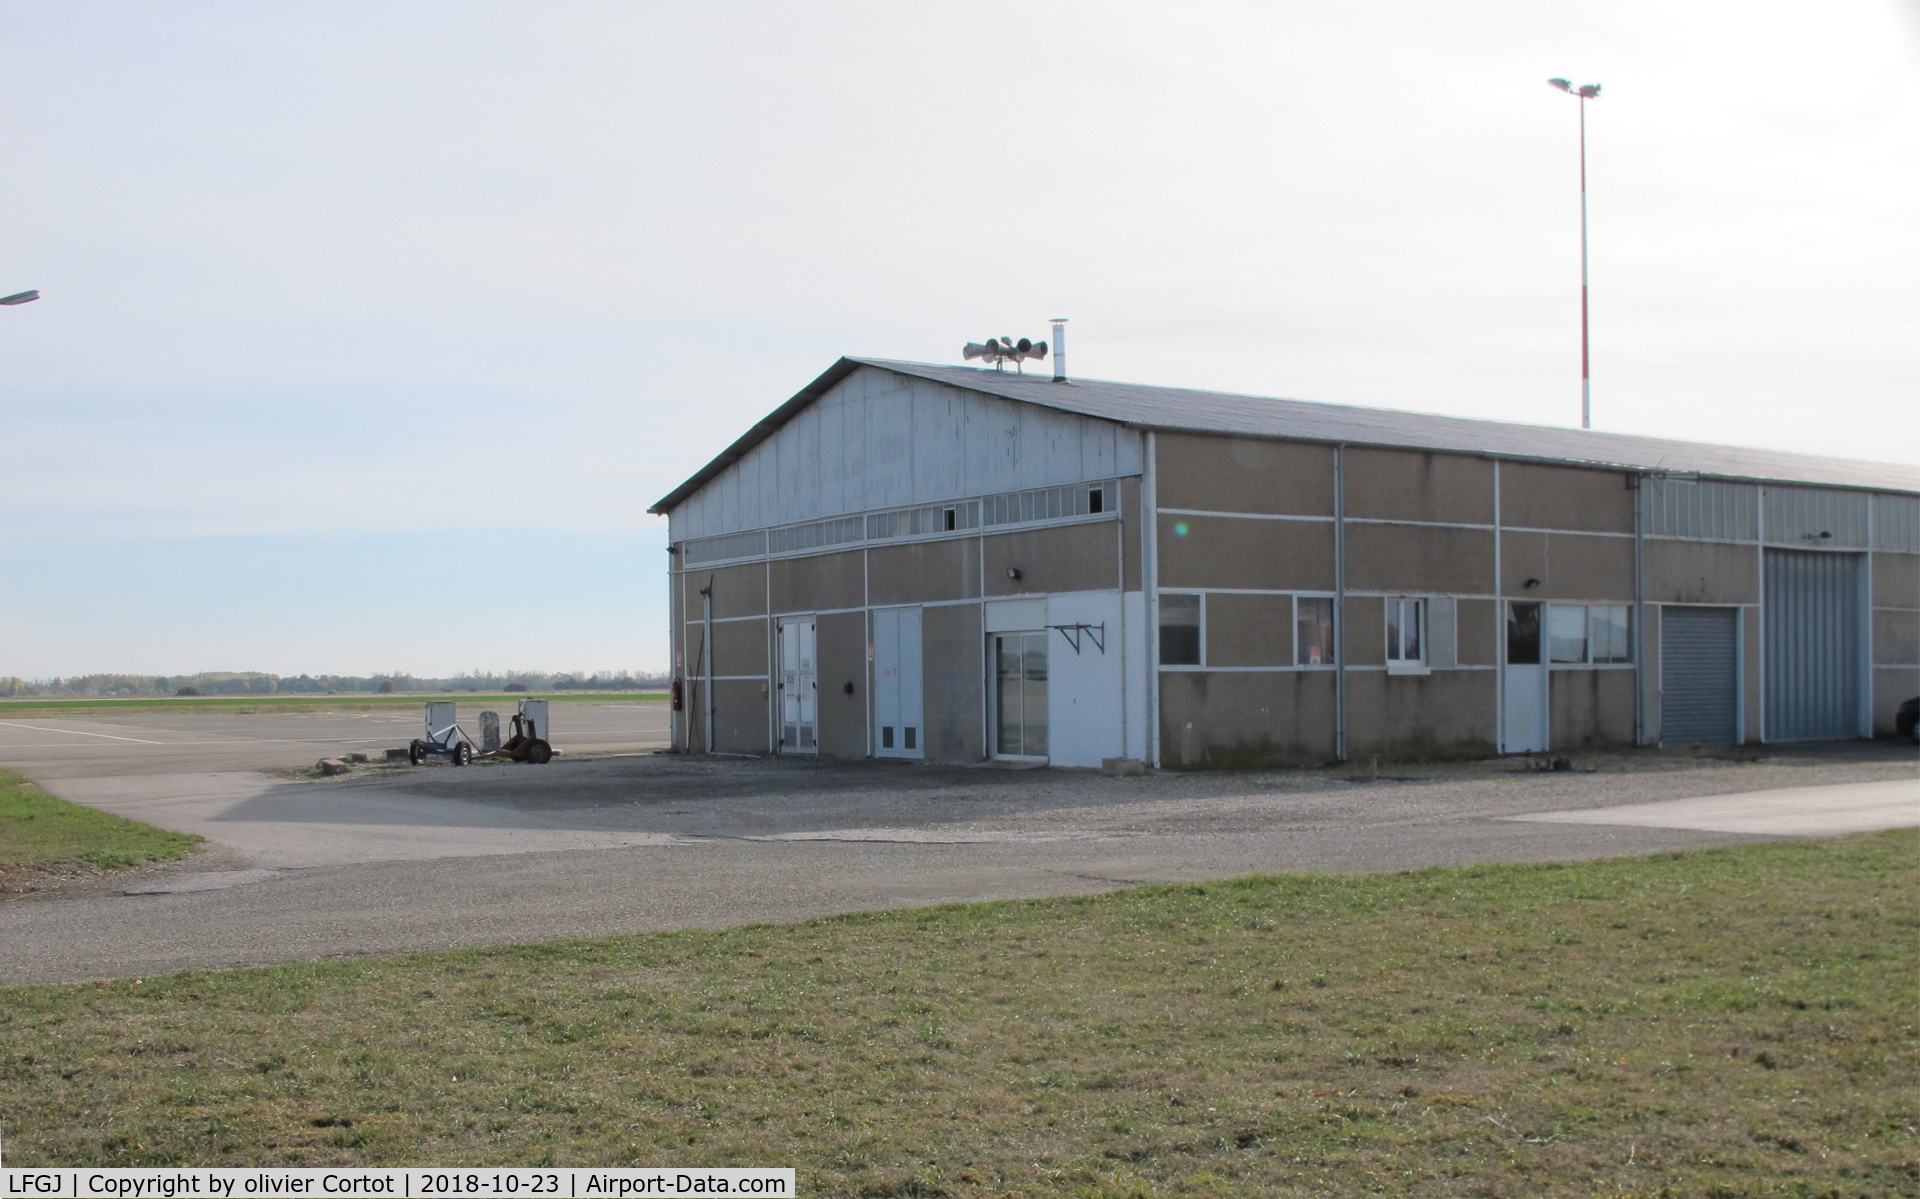 Dole Tavaux Airport, Dole France (LFGJ) - old hangar